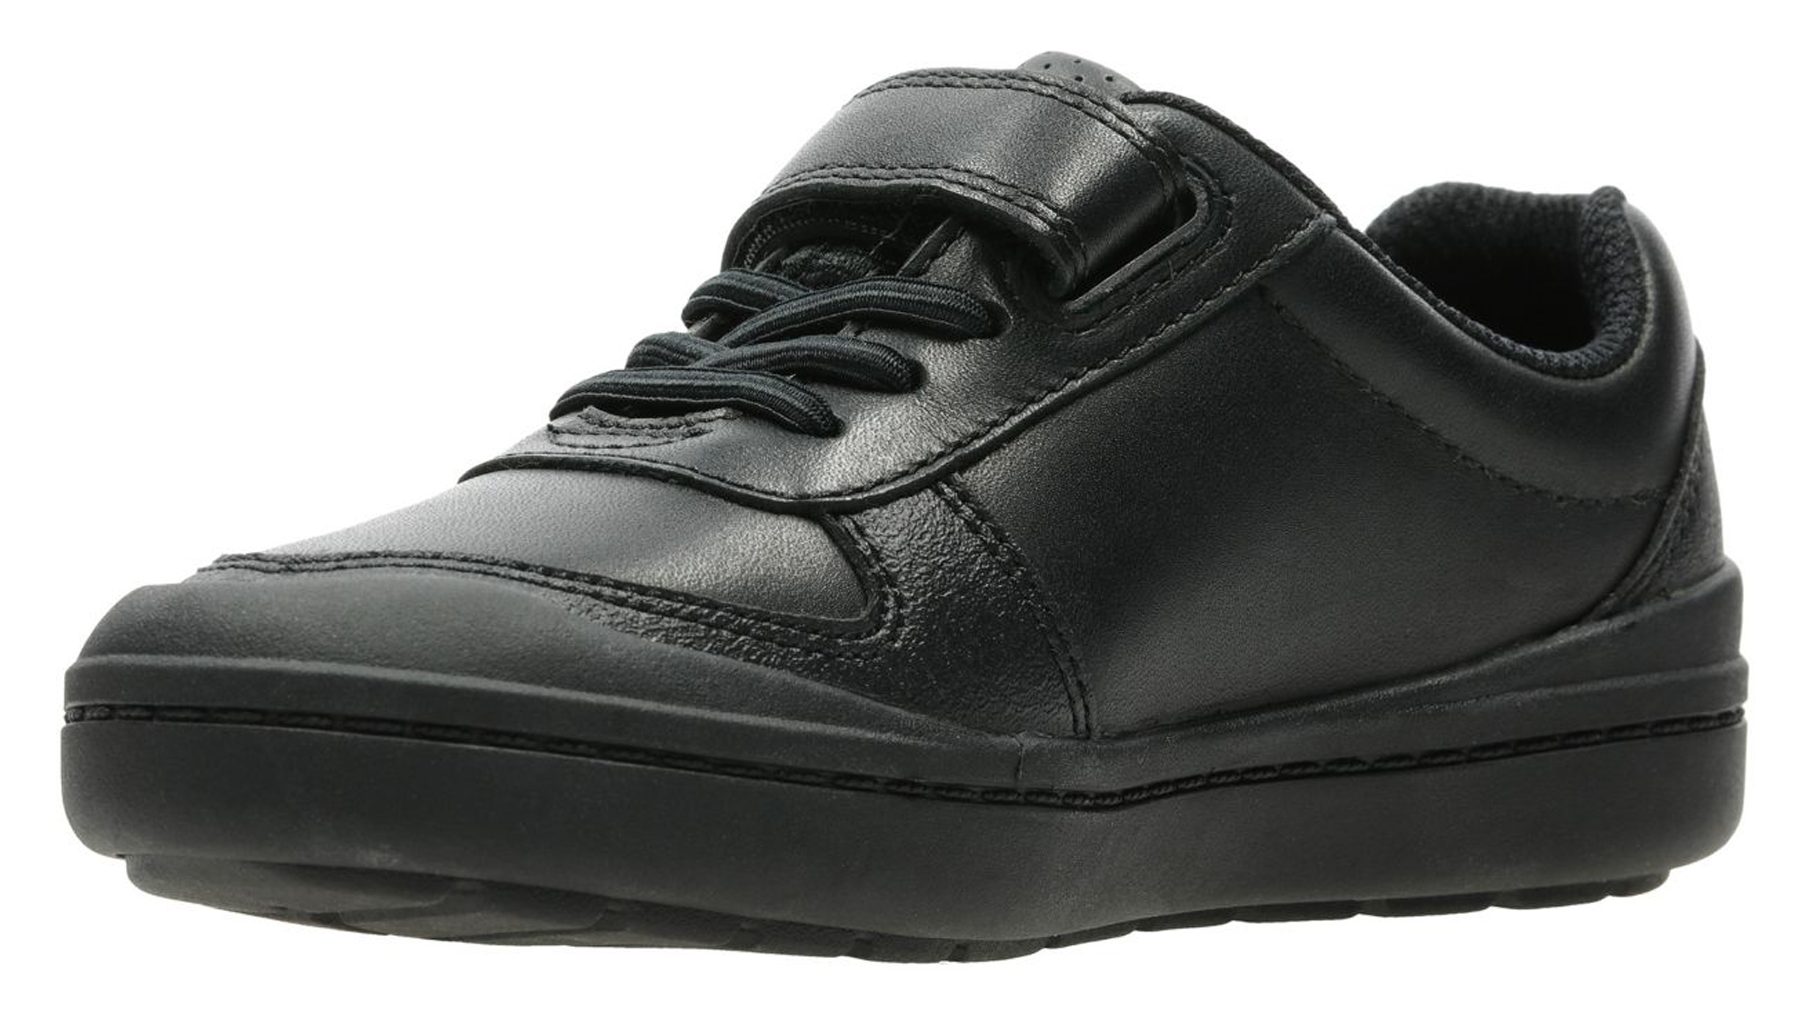 Clarks Rock Verve Toddler Black Leather 26141559 - Boys School Shoes ...